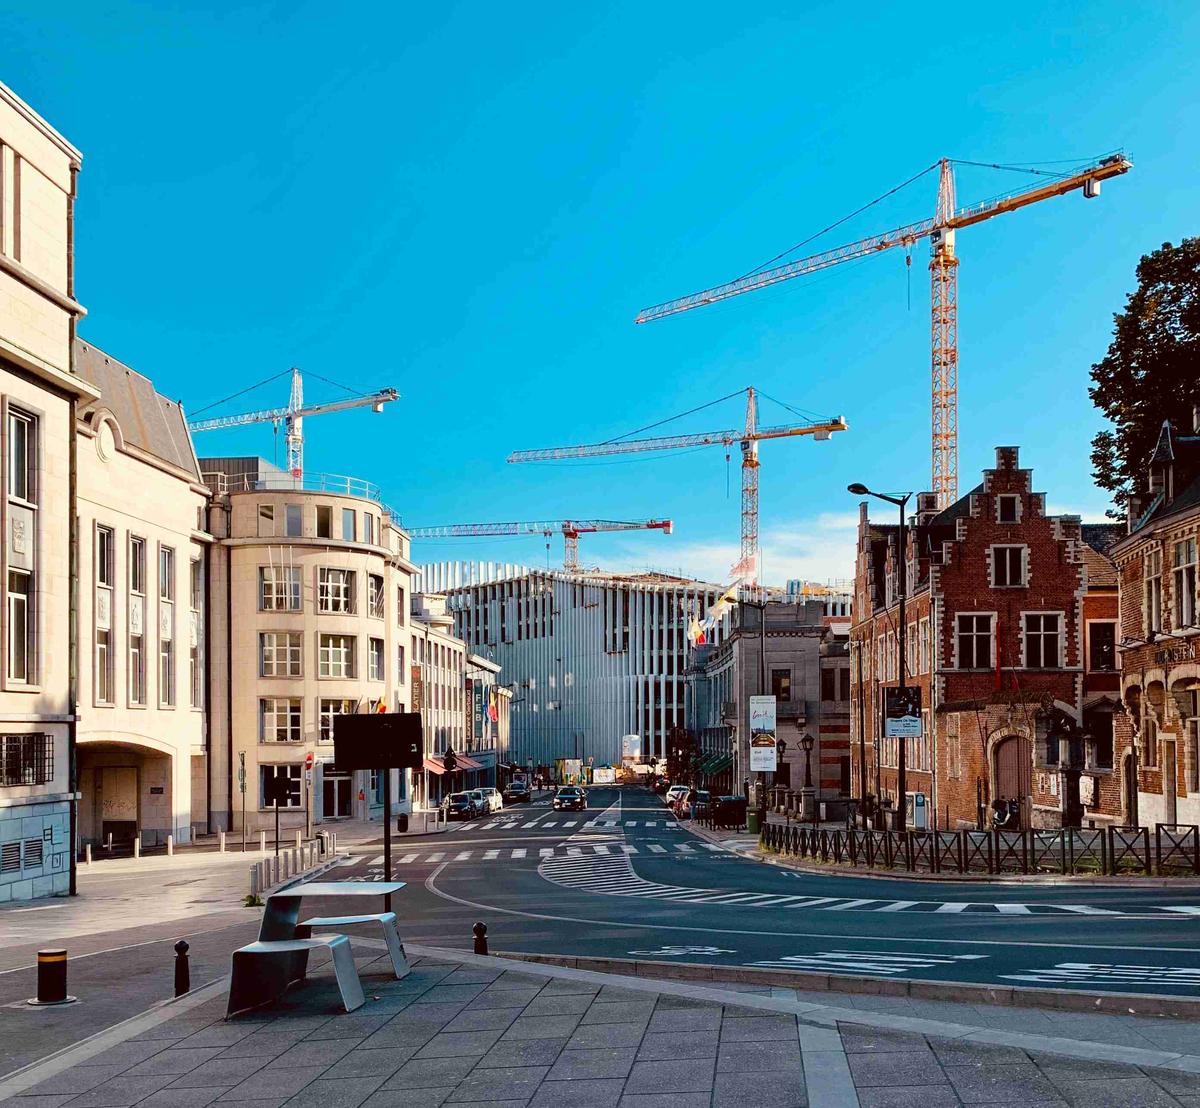 Urban Development with Cranes